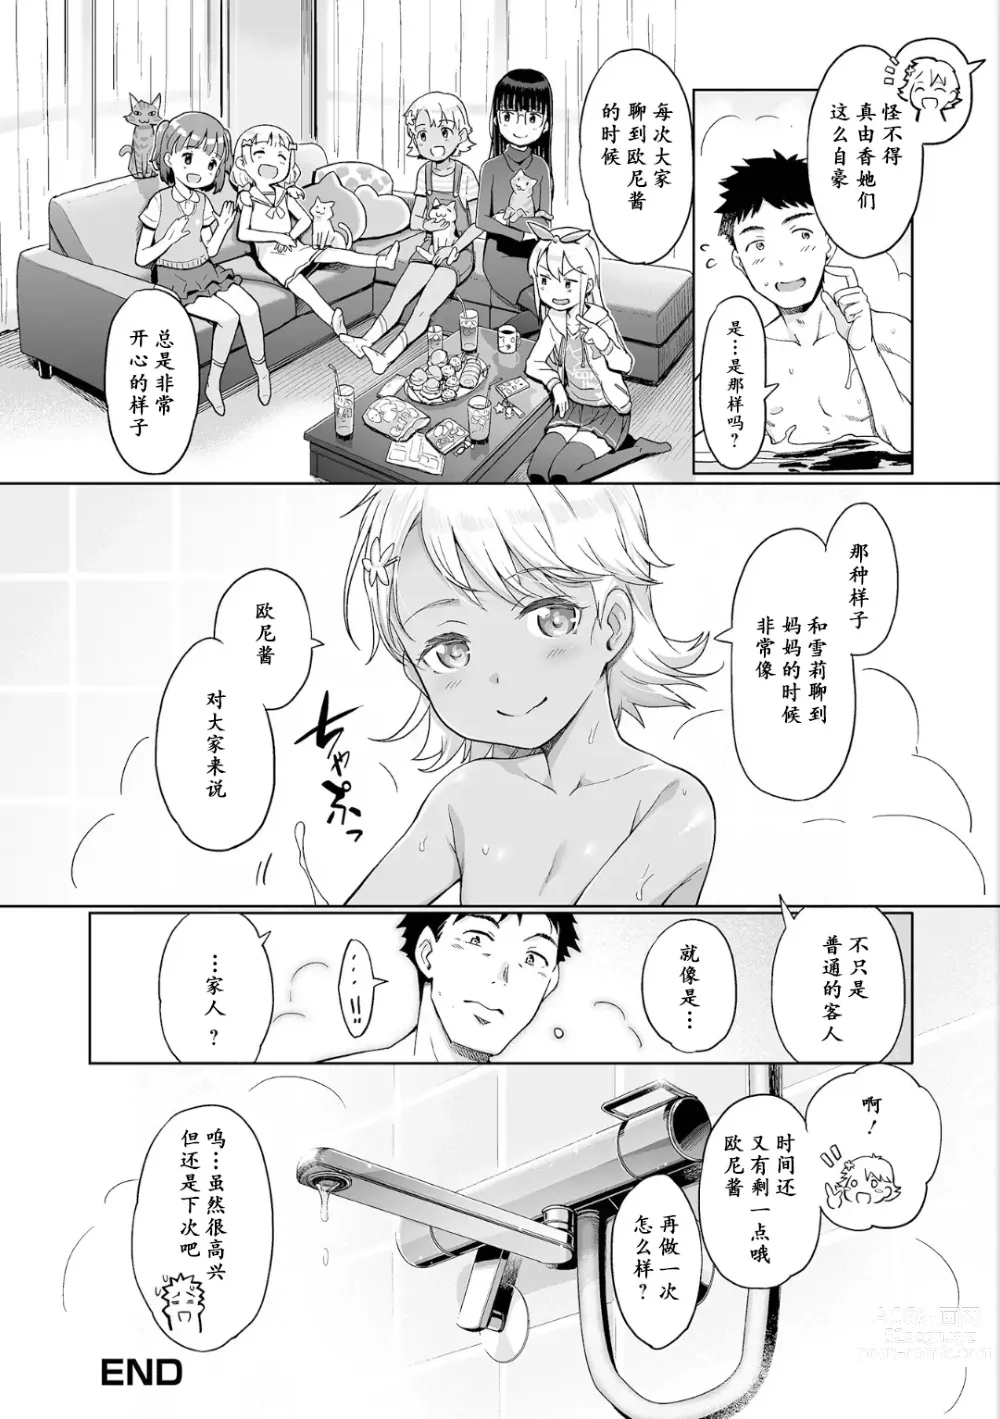 Page 18 of manga Awa no Ohime-sama #17 Kasshoku Awa Hime no Chiisana Yokubou